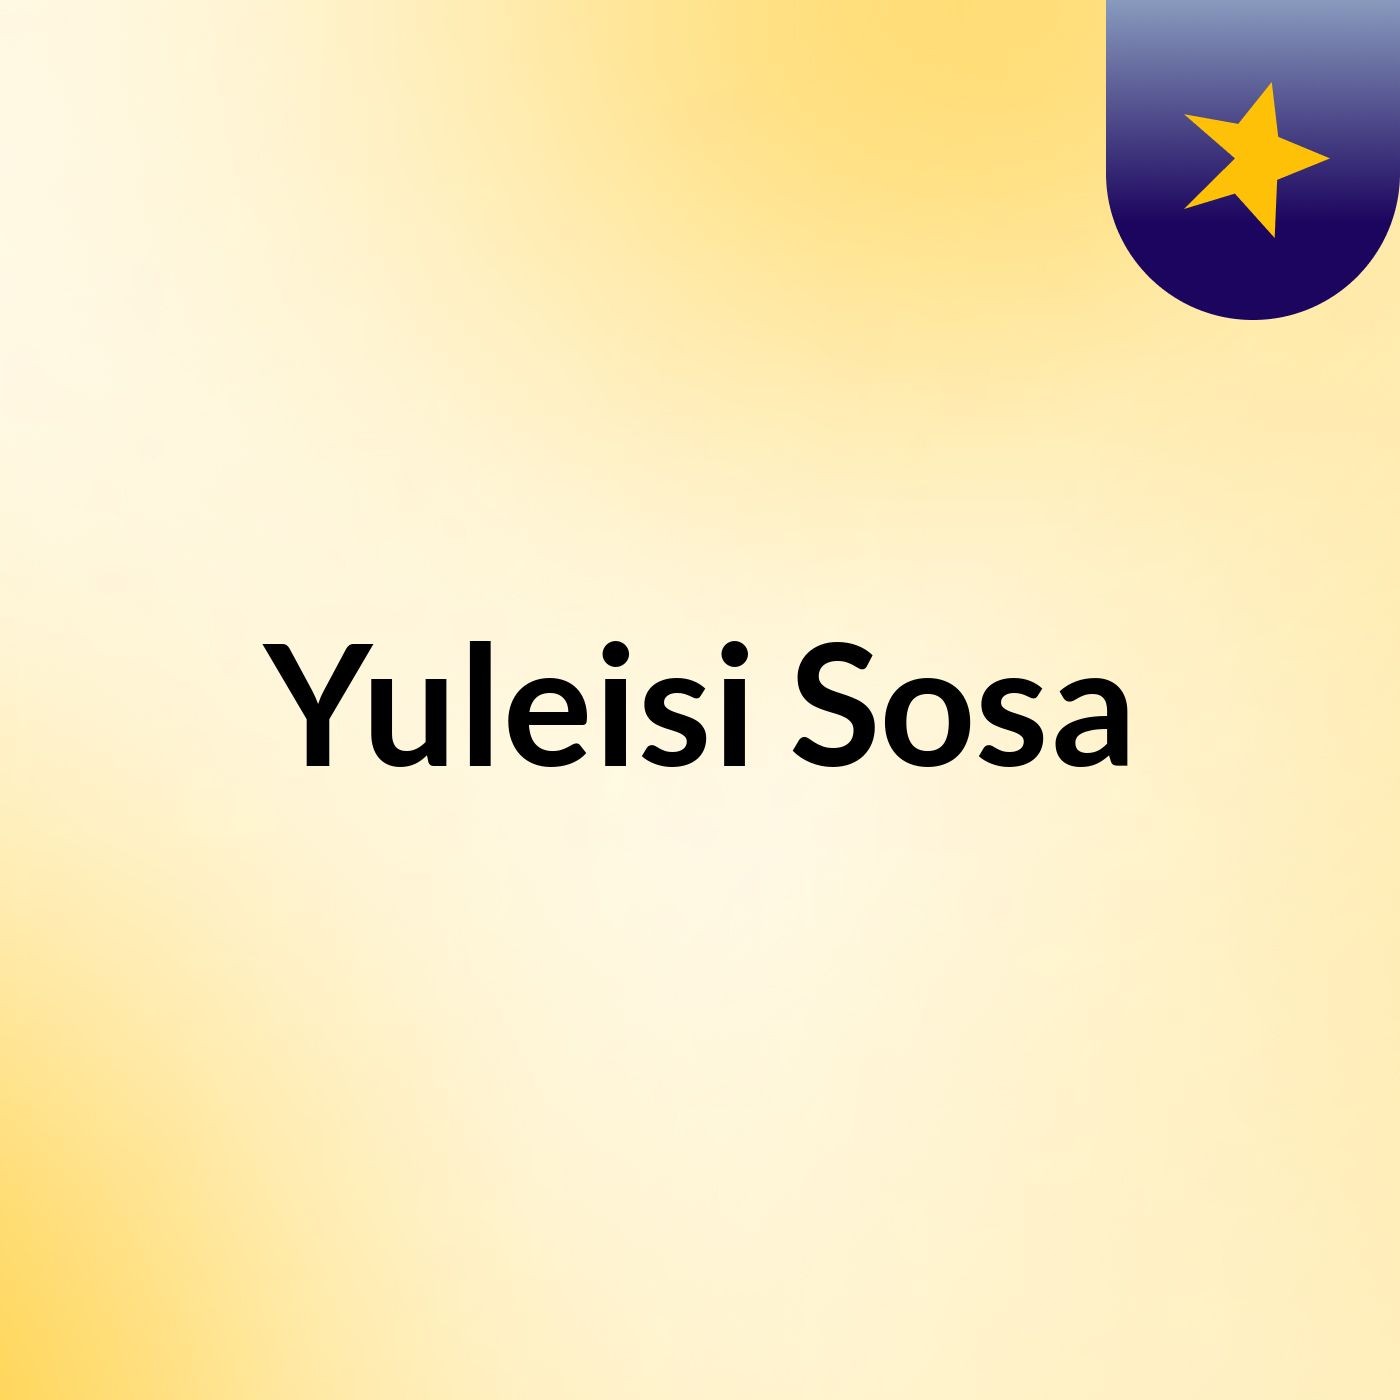 Yuleisi Sosa